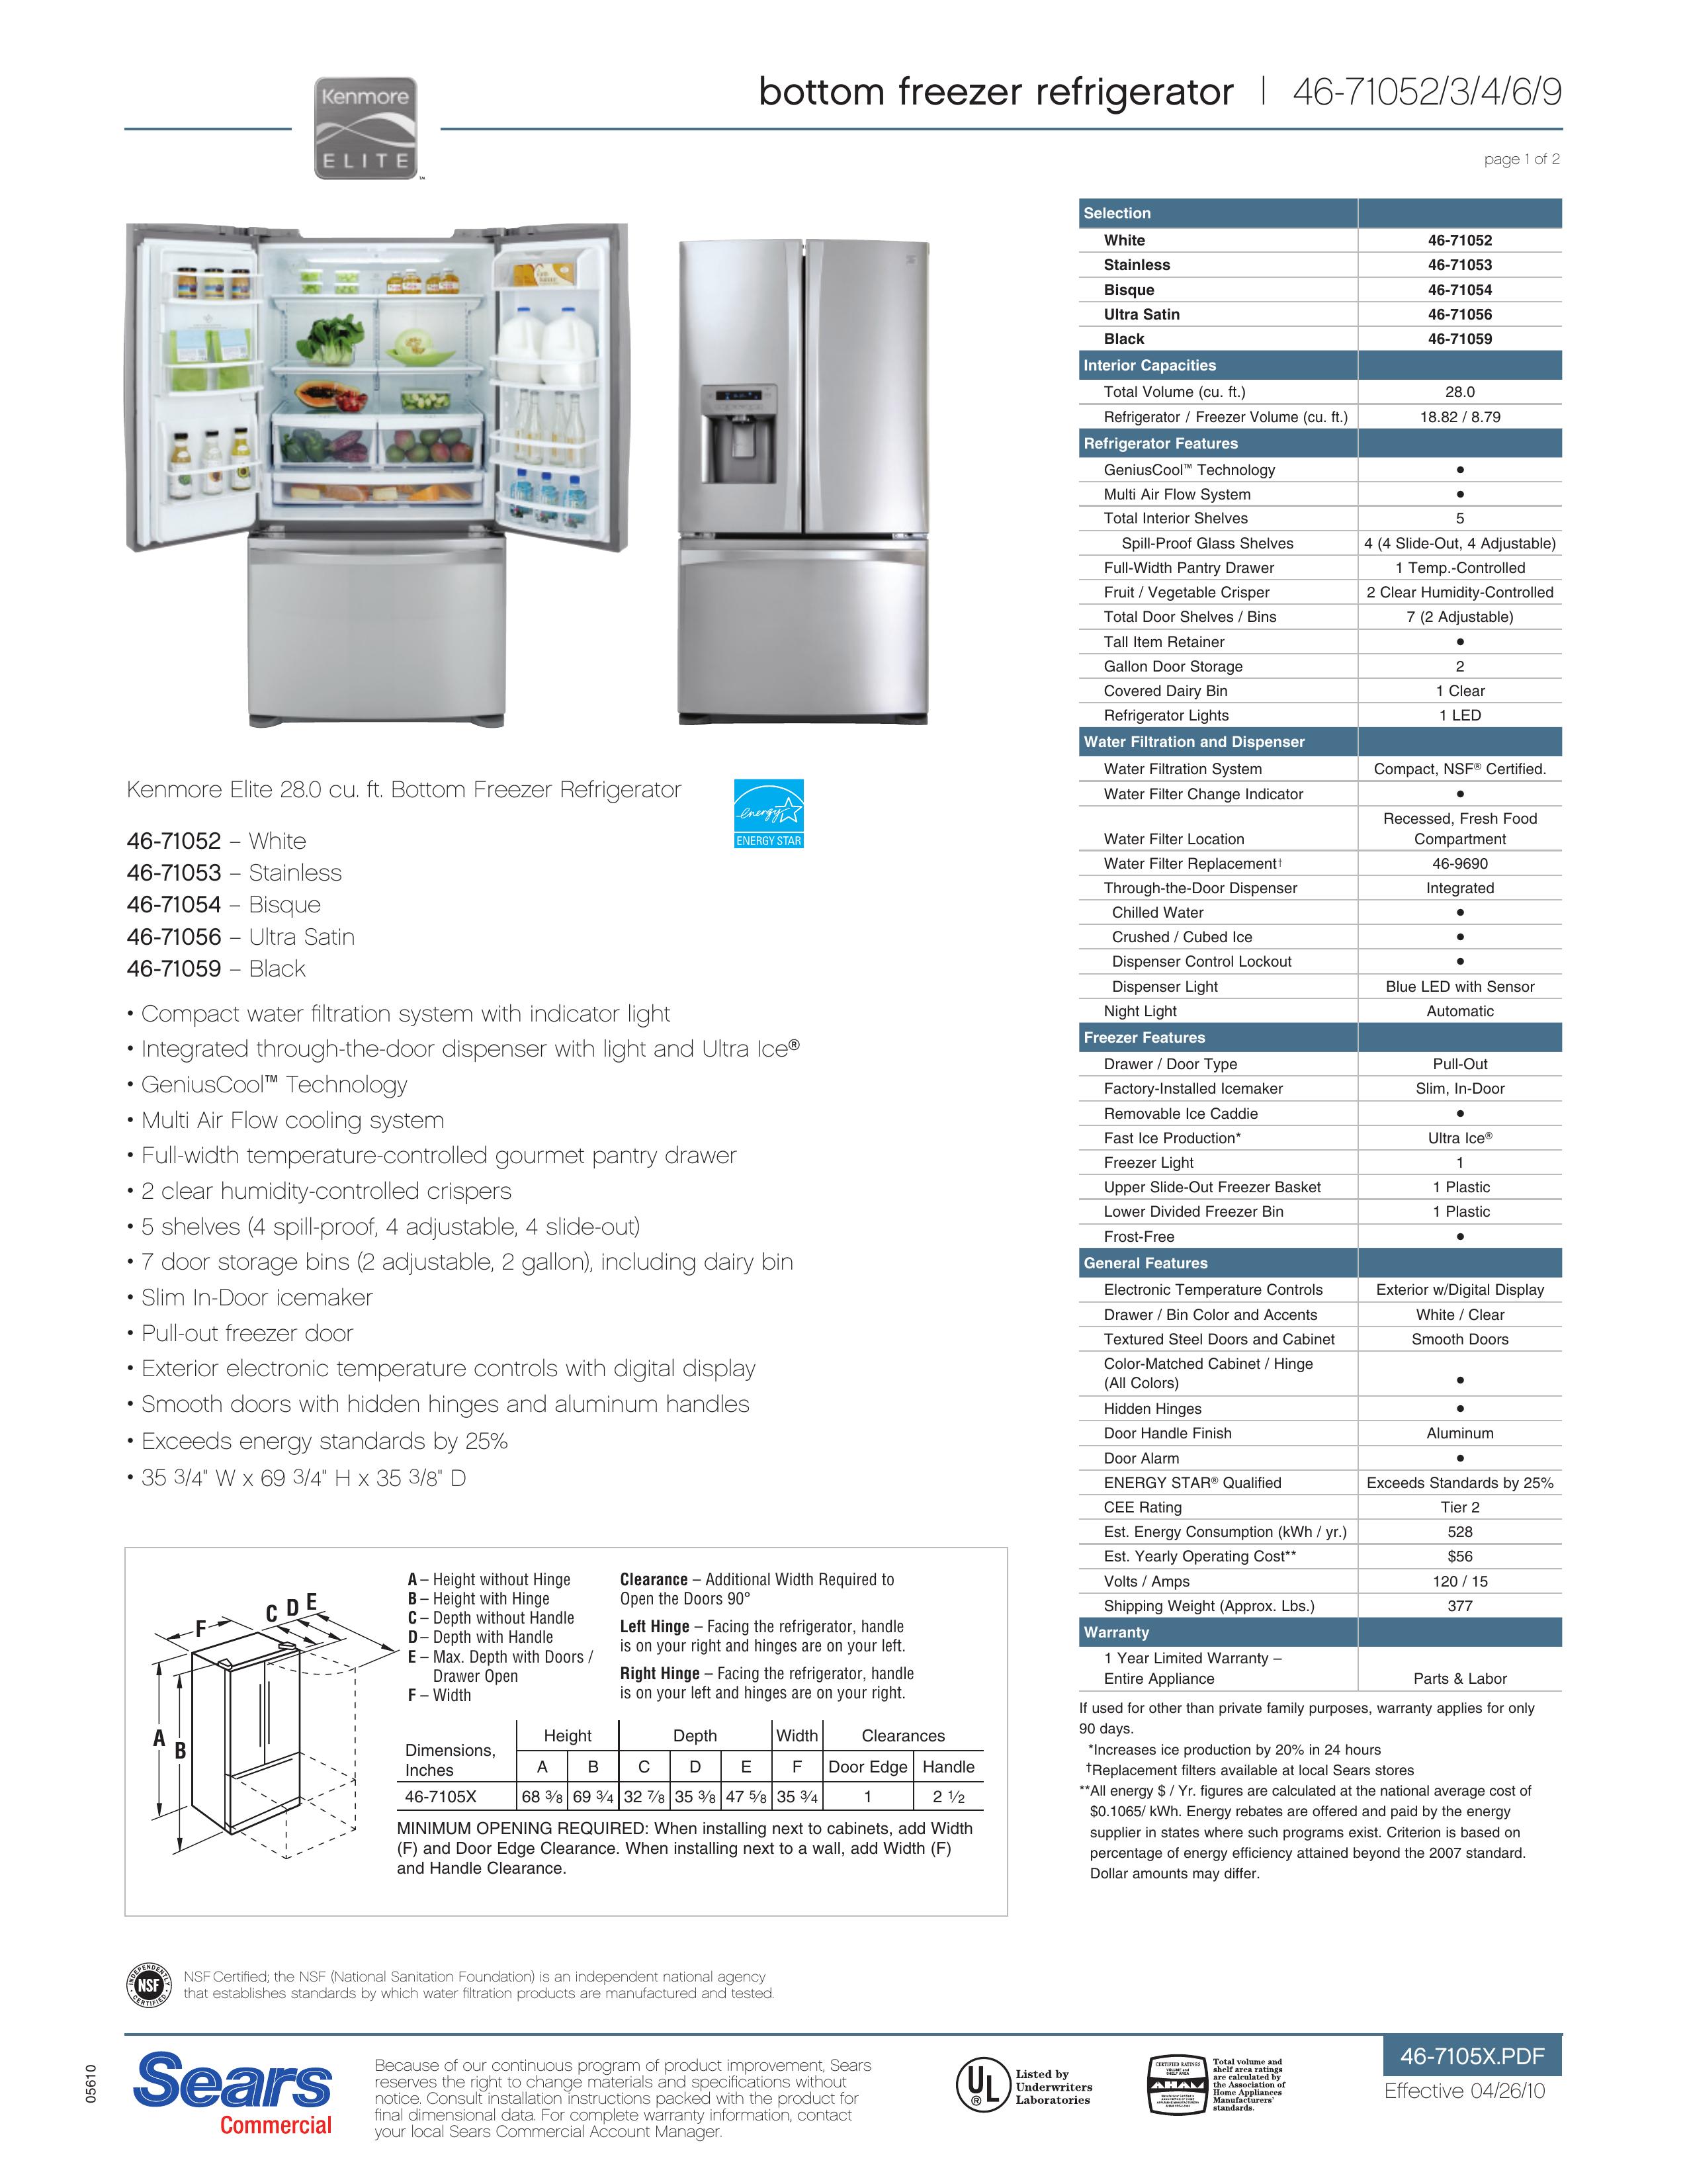 Sears 46-71056 Refrigerator User Manual